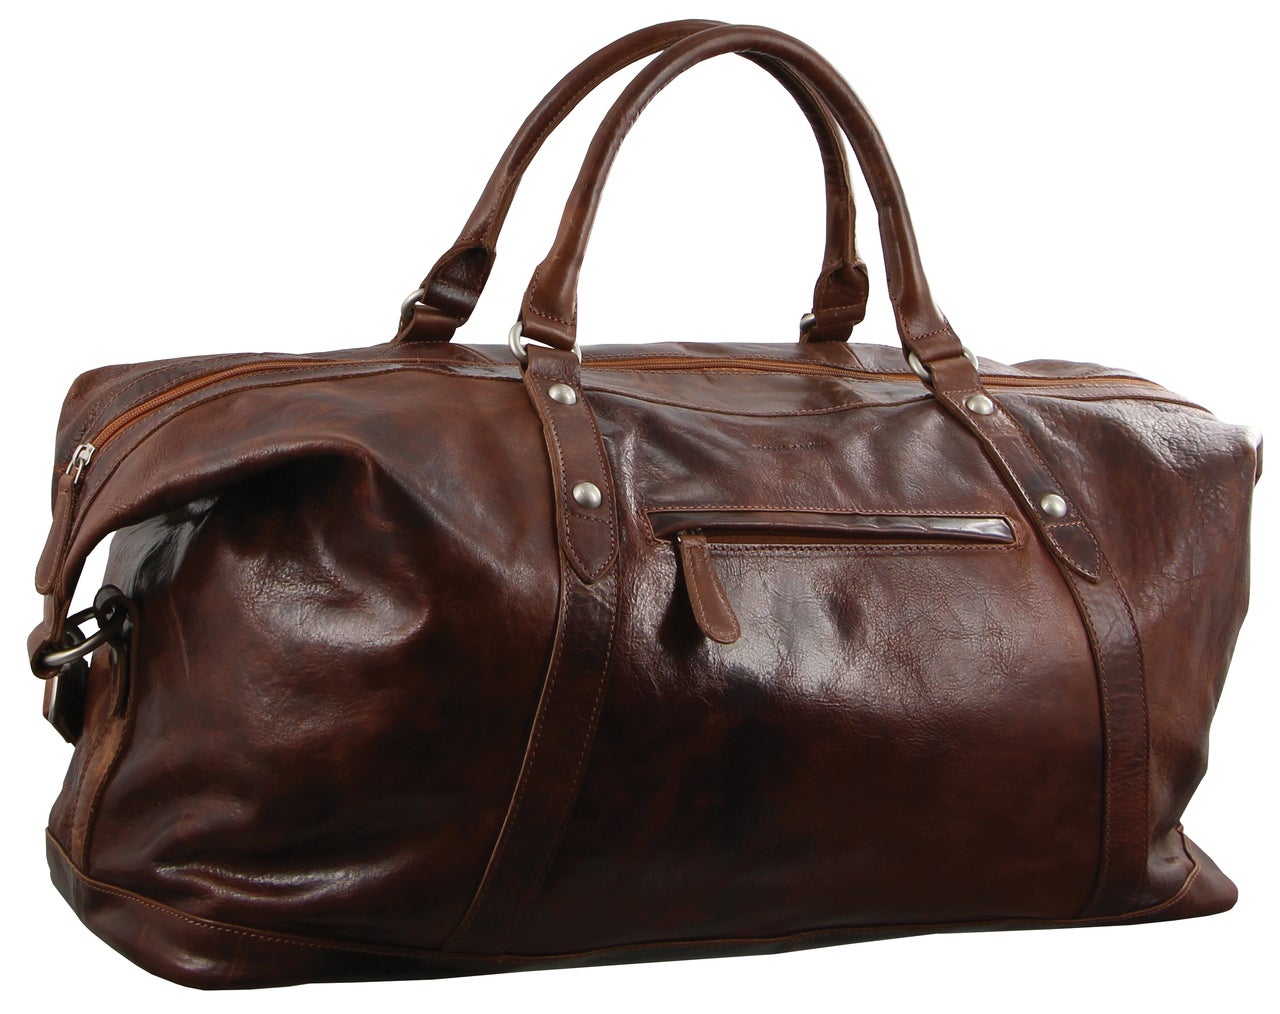 Pierre Cardin Rustic Leather Travel Business Trip Bag Overnight - Cognac